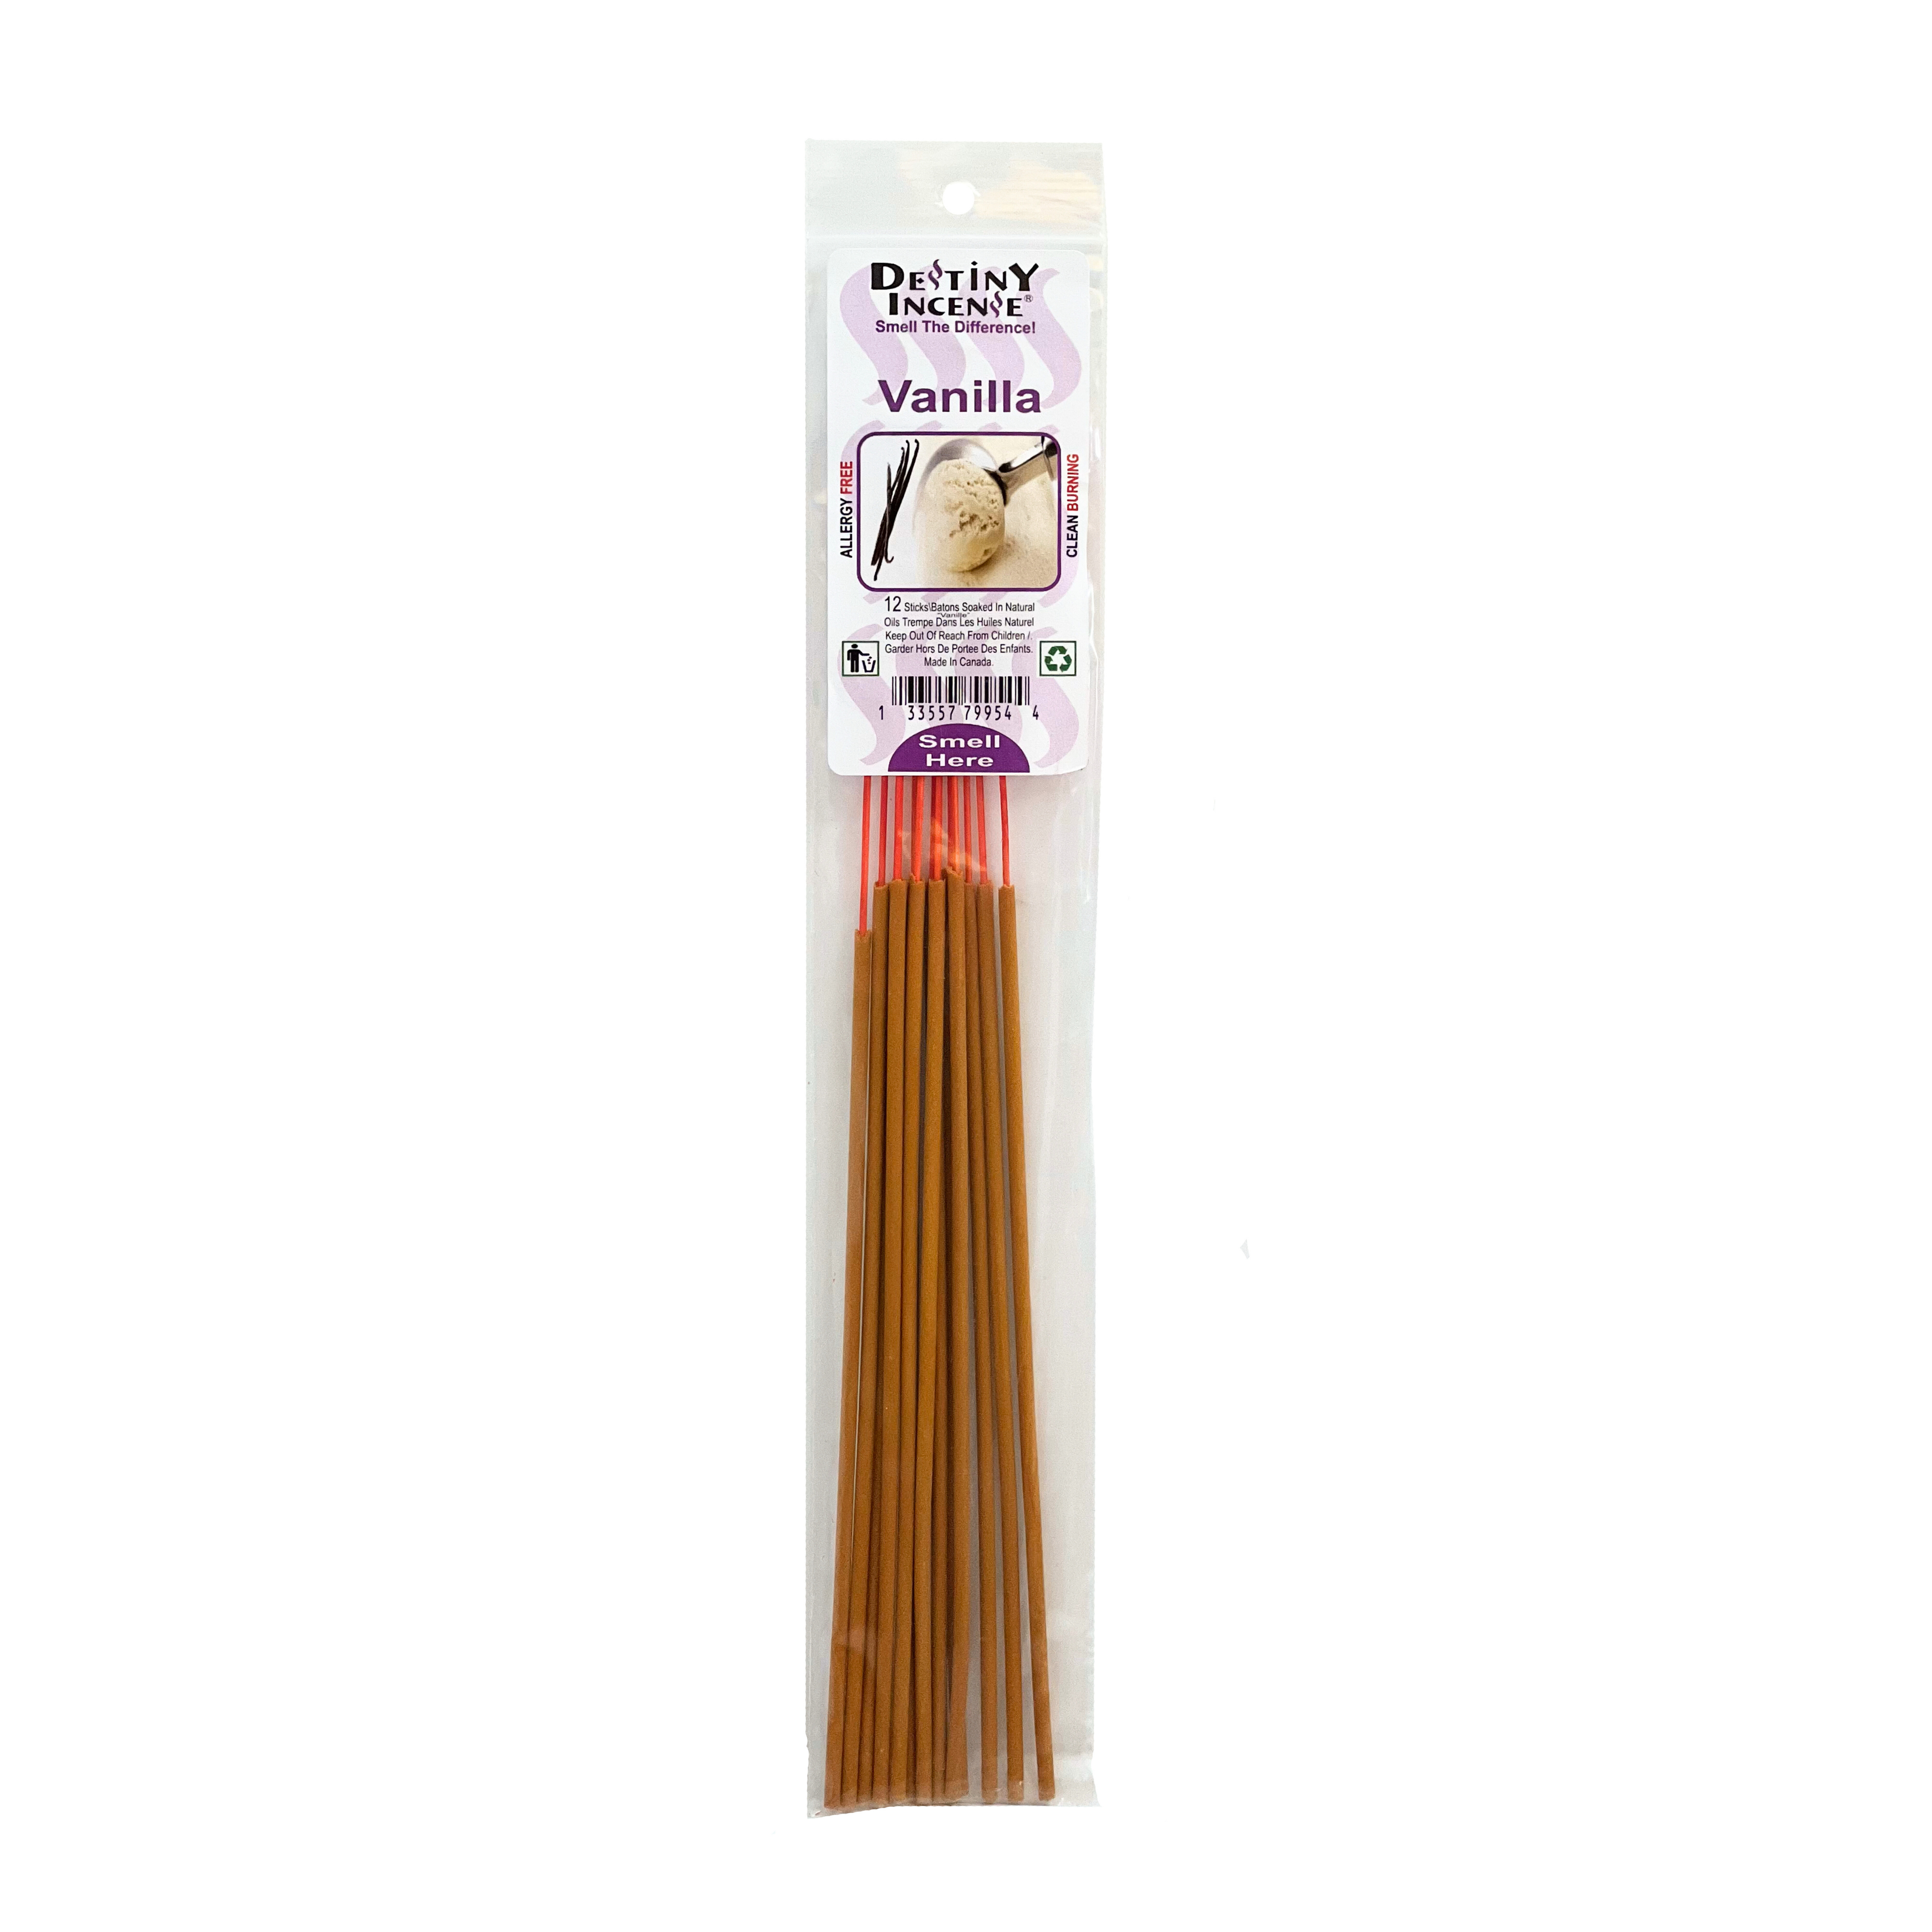 Destiny Incense Vanilla 12 Sticks